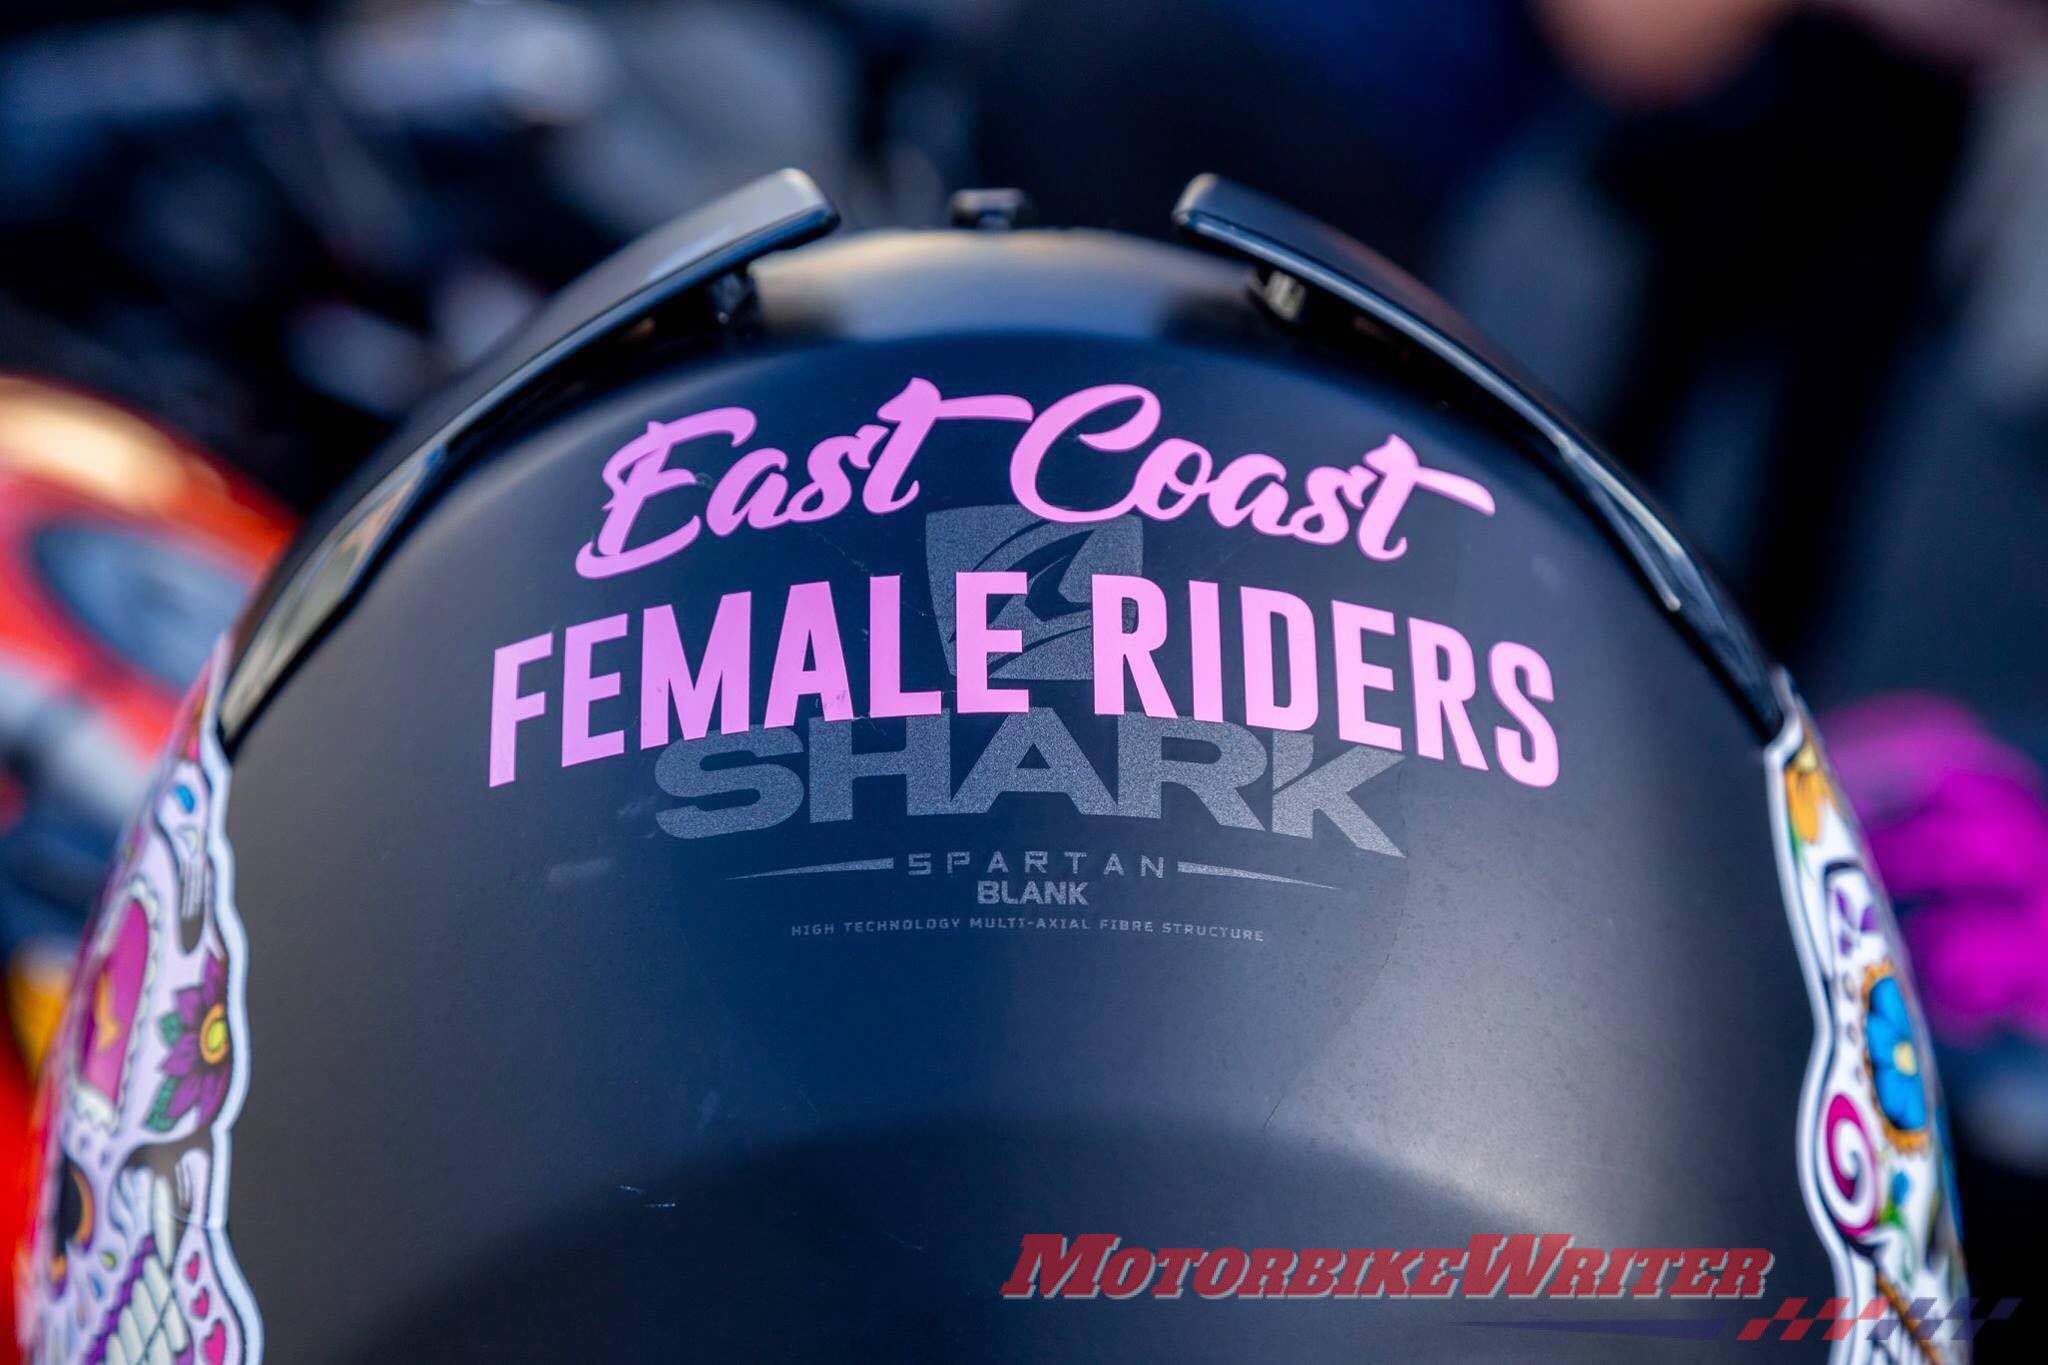 East Coast Female Riders Female riders create safe space to share